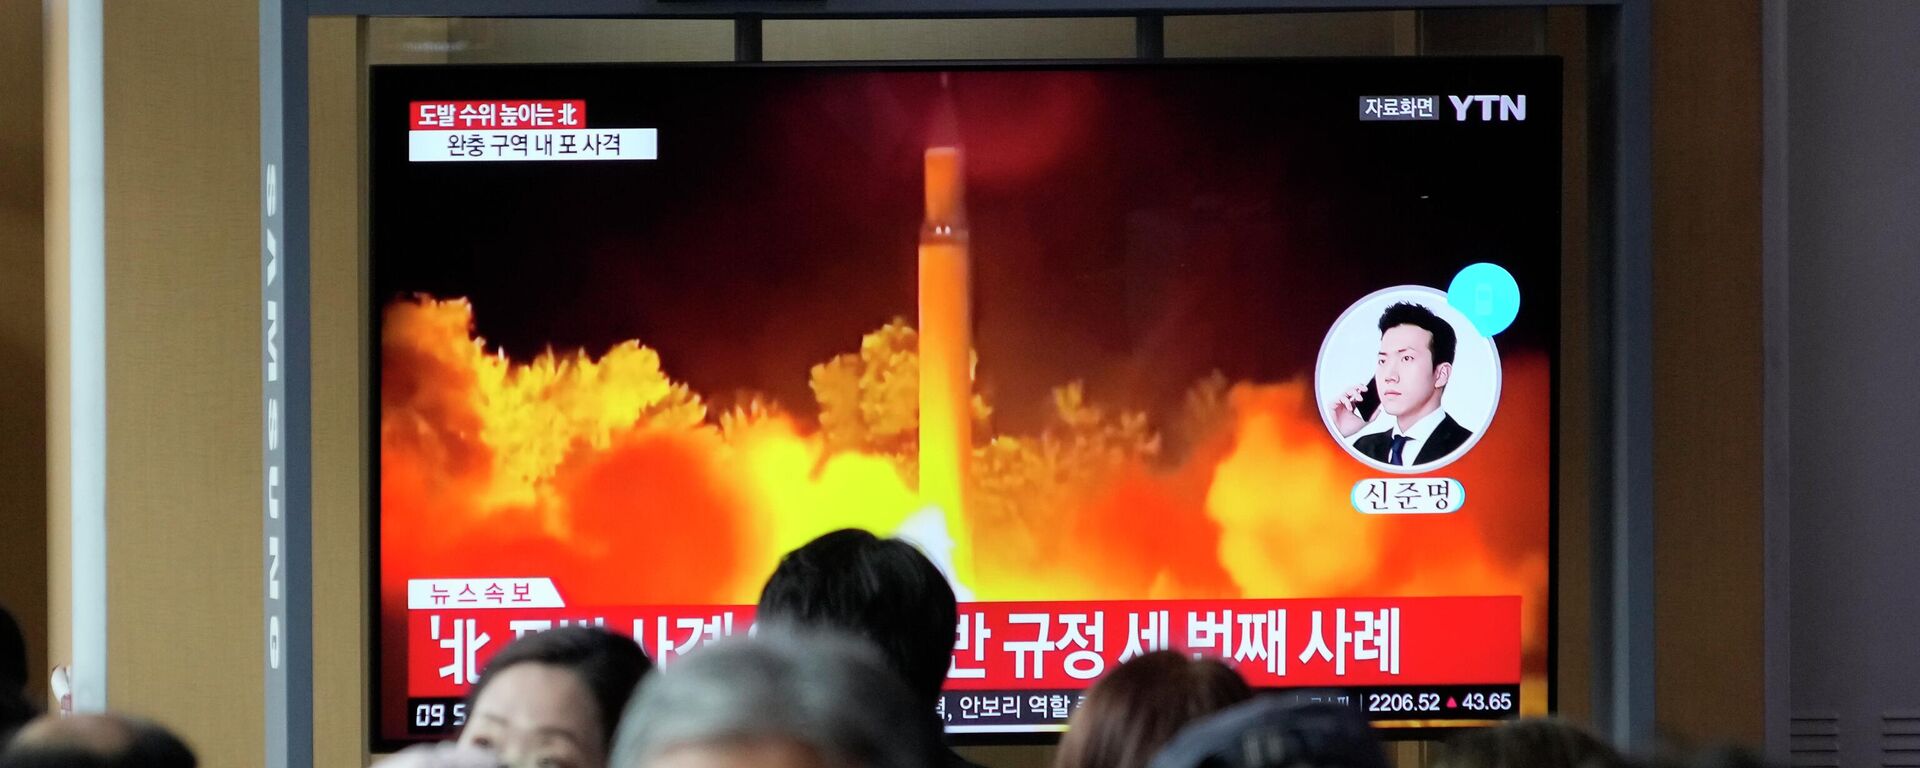 Corea del Norte lanzó un misil balístico - Sputnik Mundo, 1920, 07.11.2022